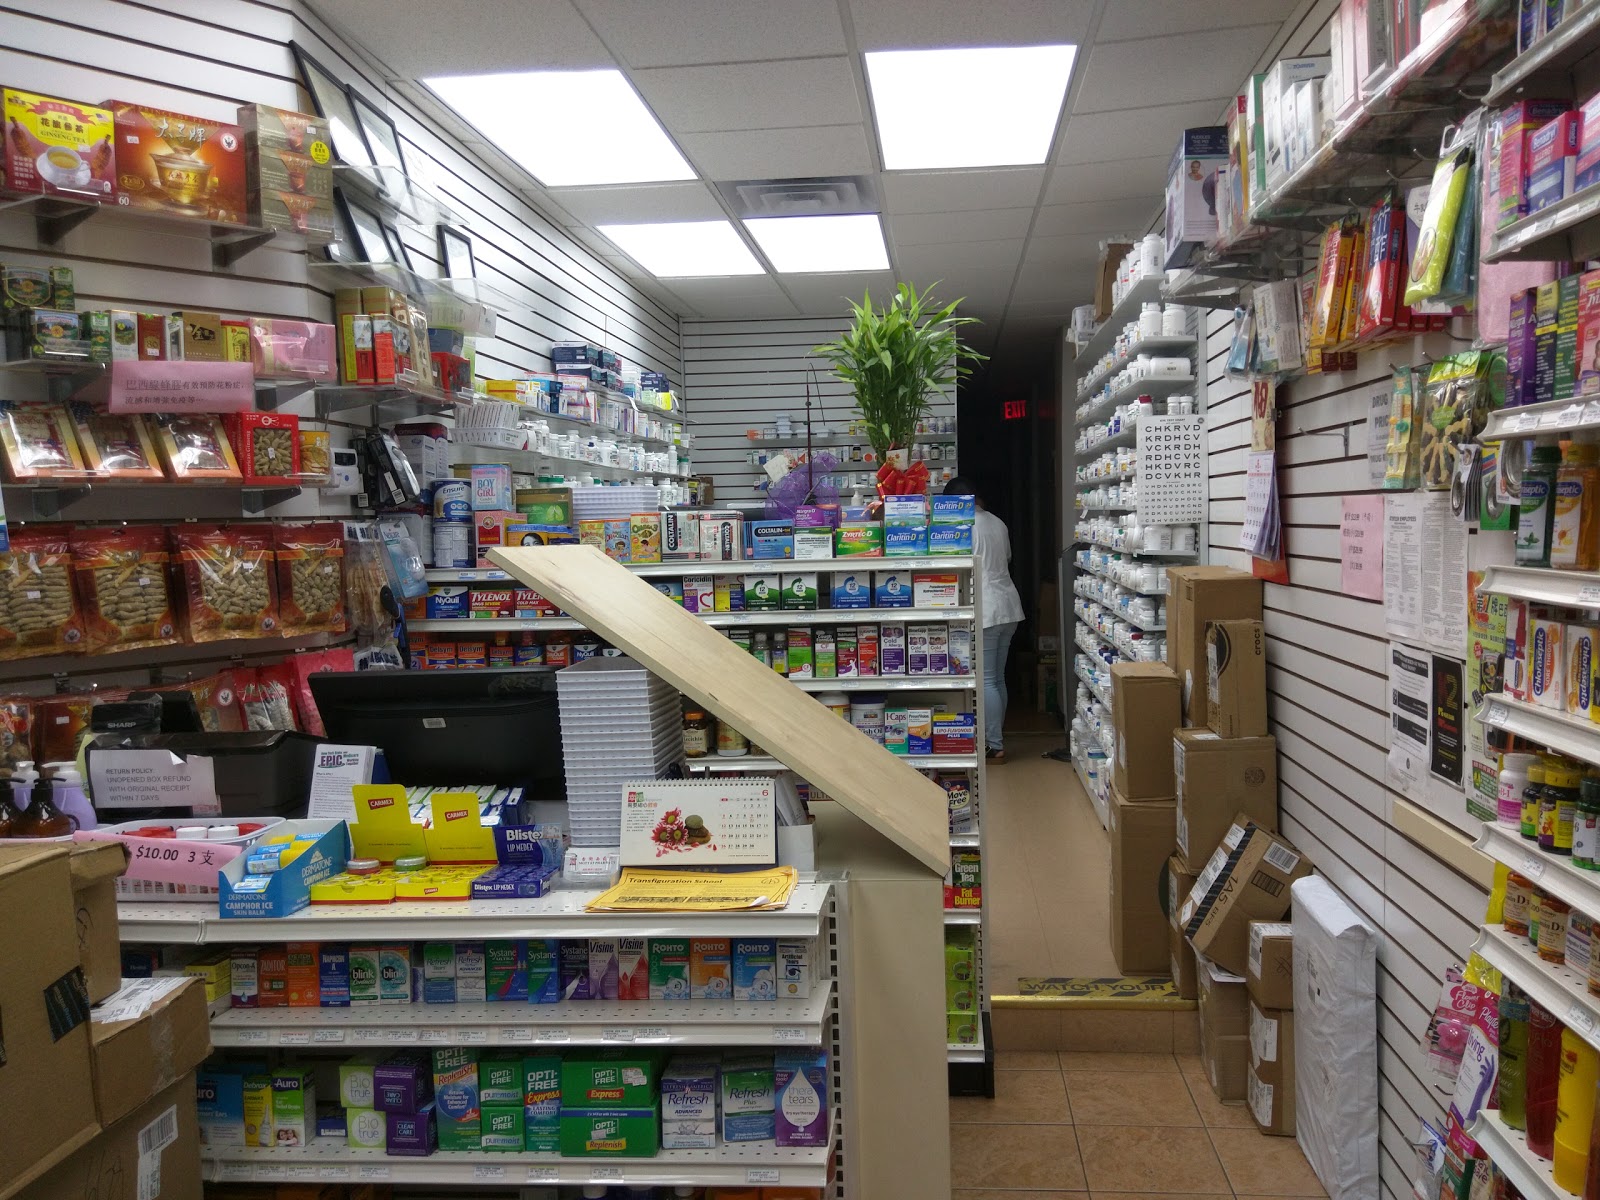 Photo of MOTT ST PHARMACY in New York City, New York, United States - 1 Picture of Point of interest, Establishment, Store, Health, Pharmacy